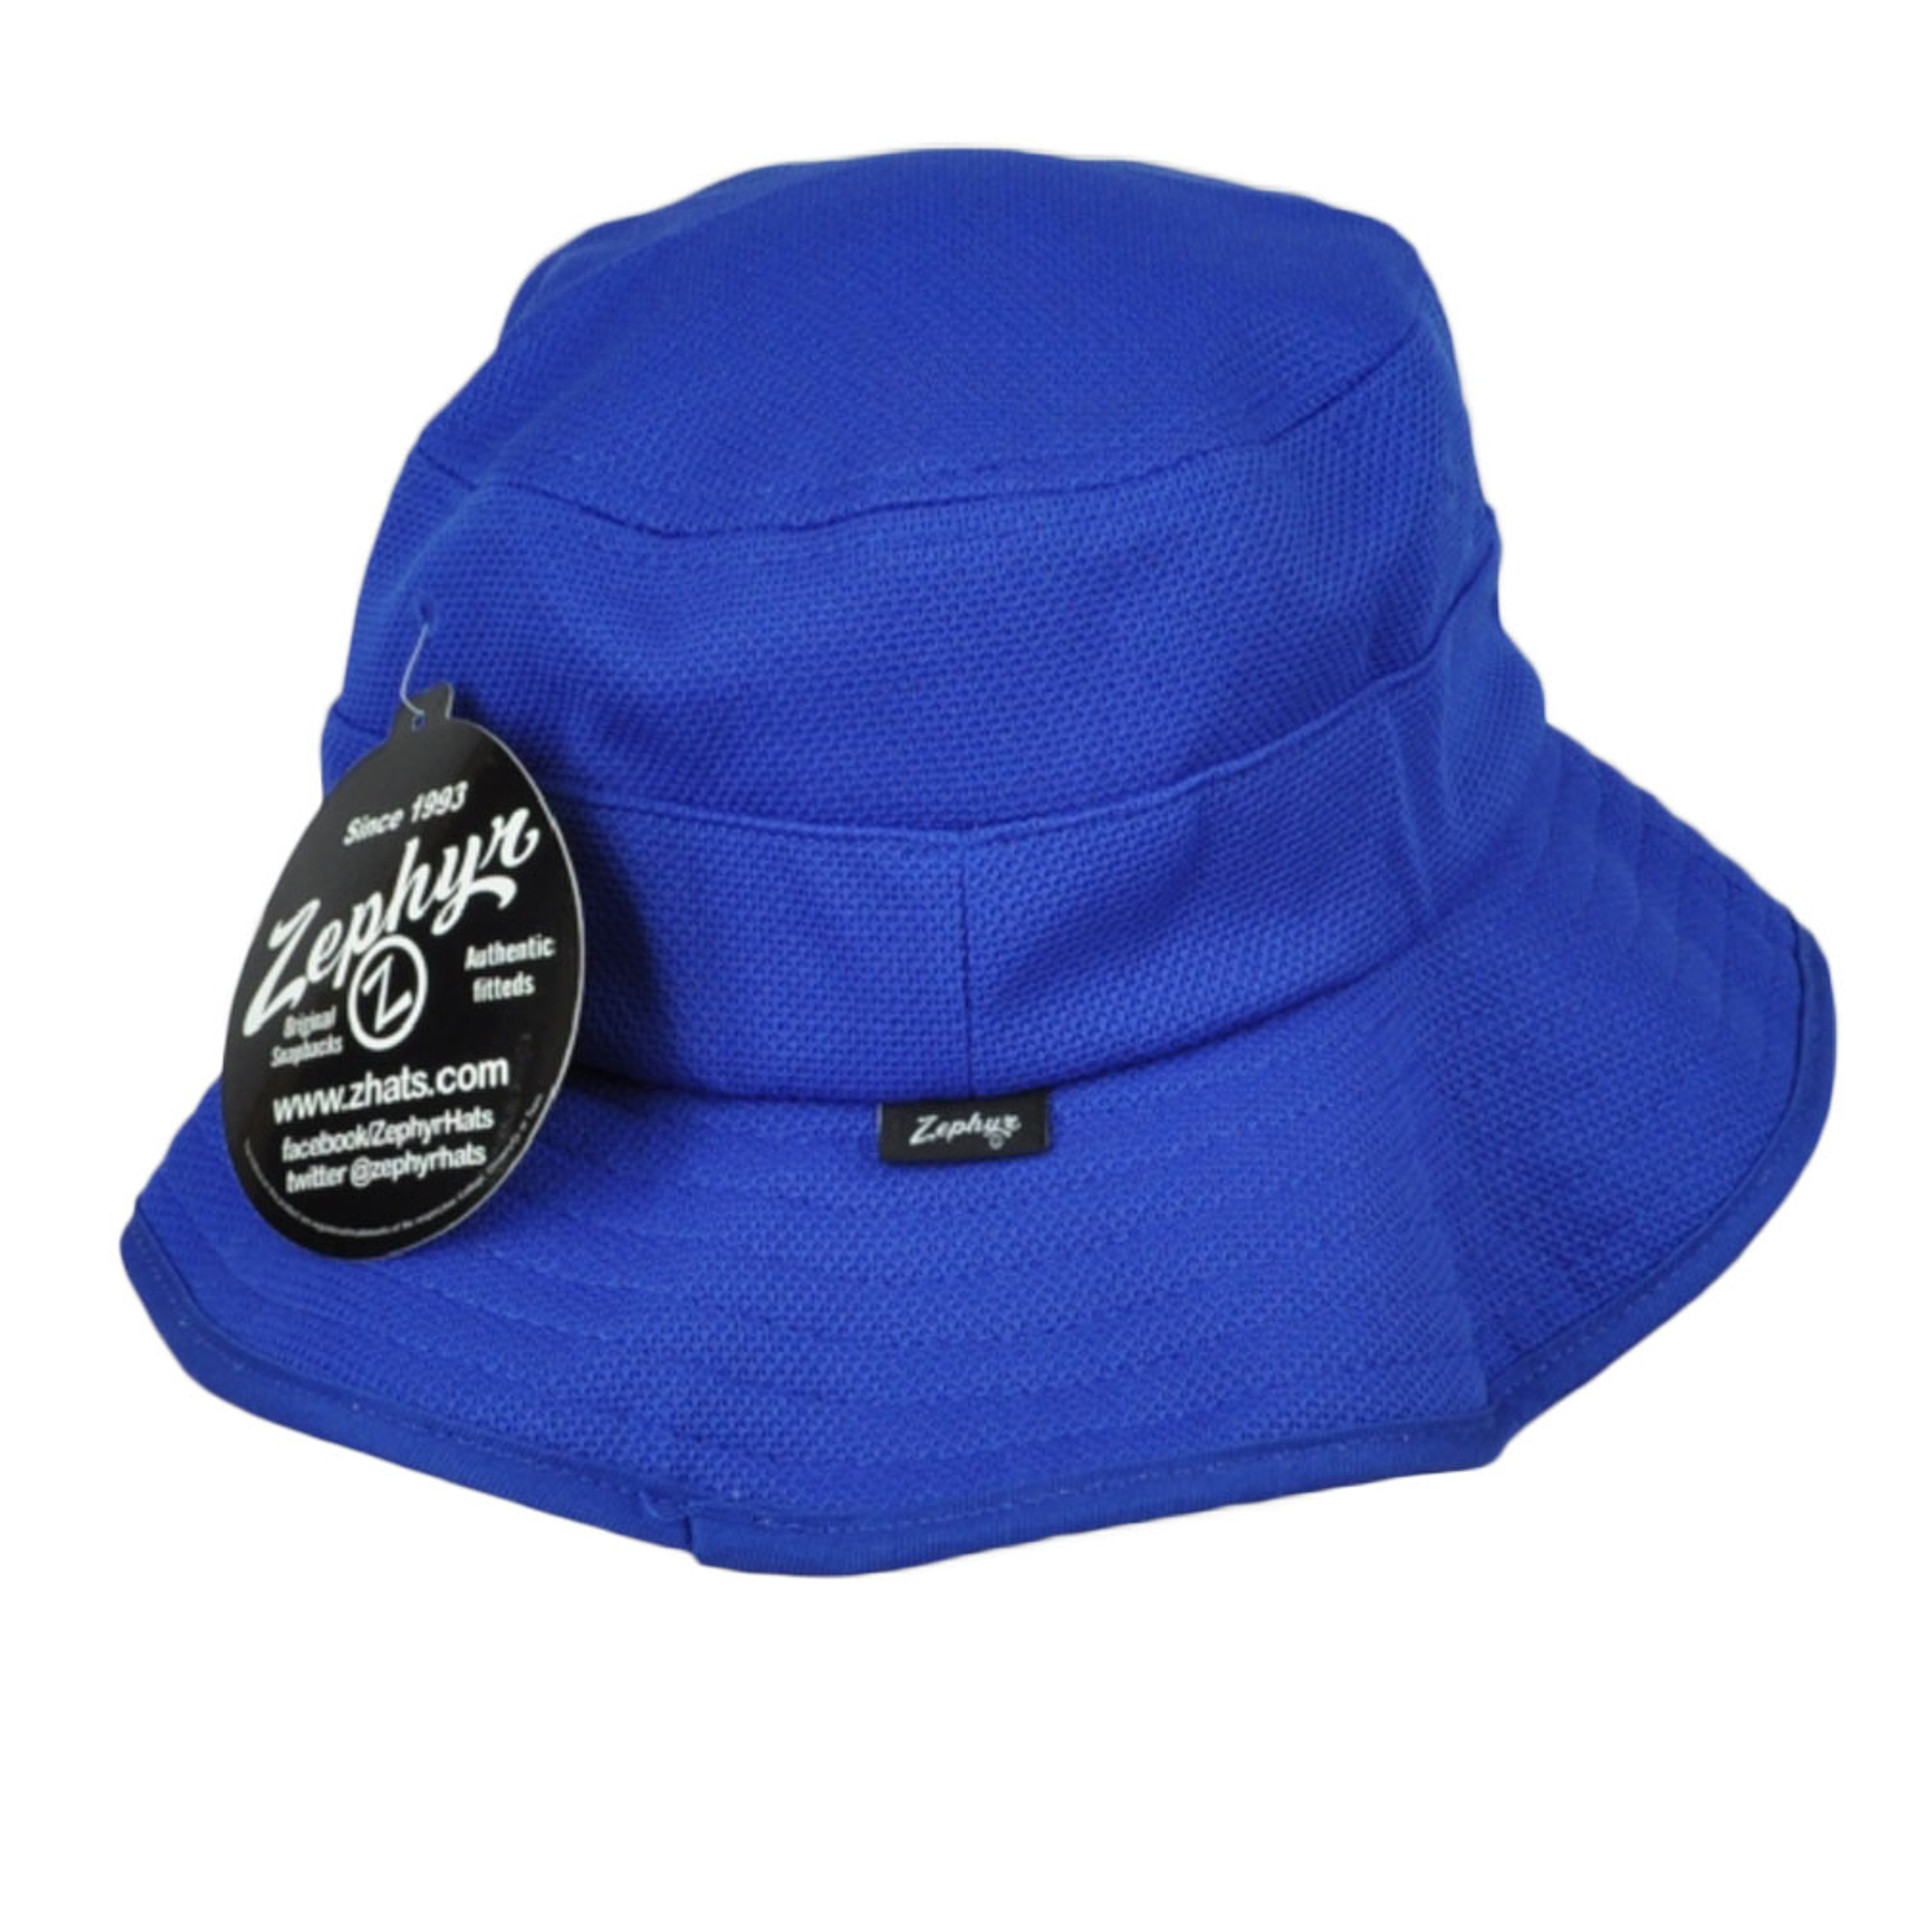 Zephyr Royal Blue Sun Bucket Fisherman Hat Blank Small Medium Outdoors ...